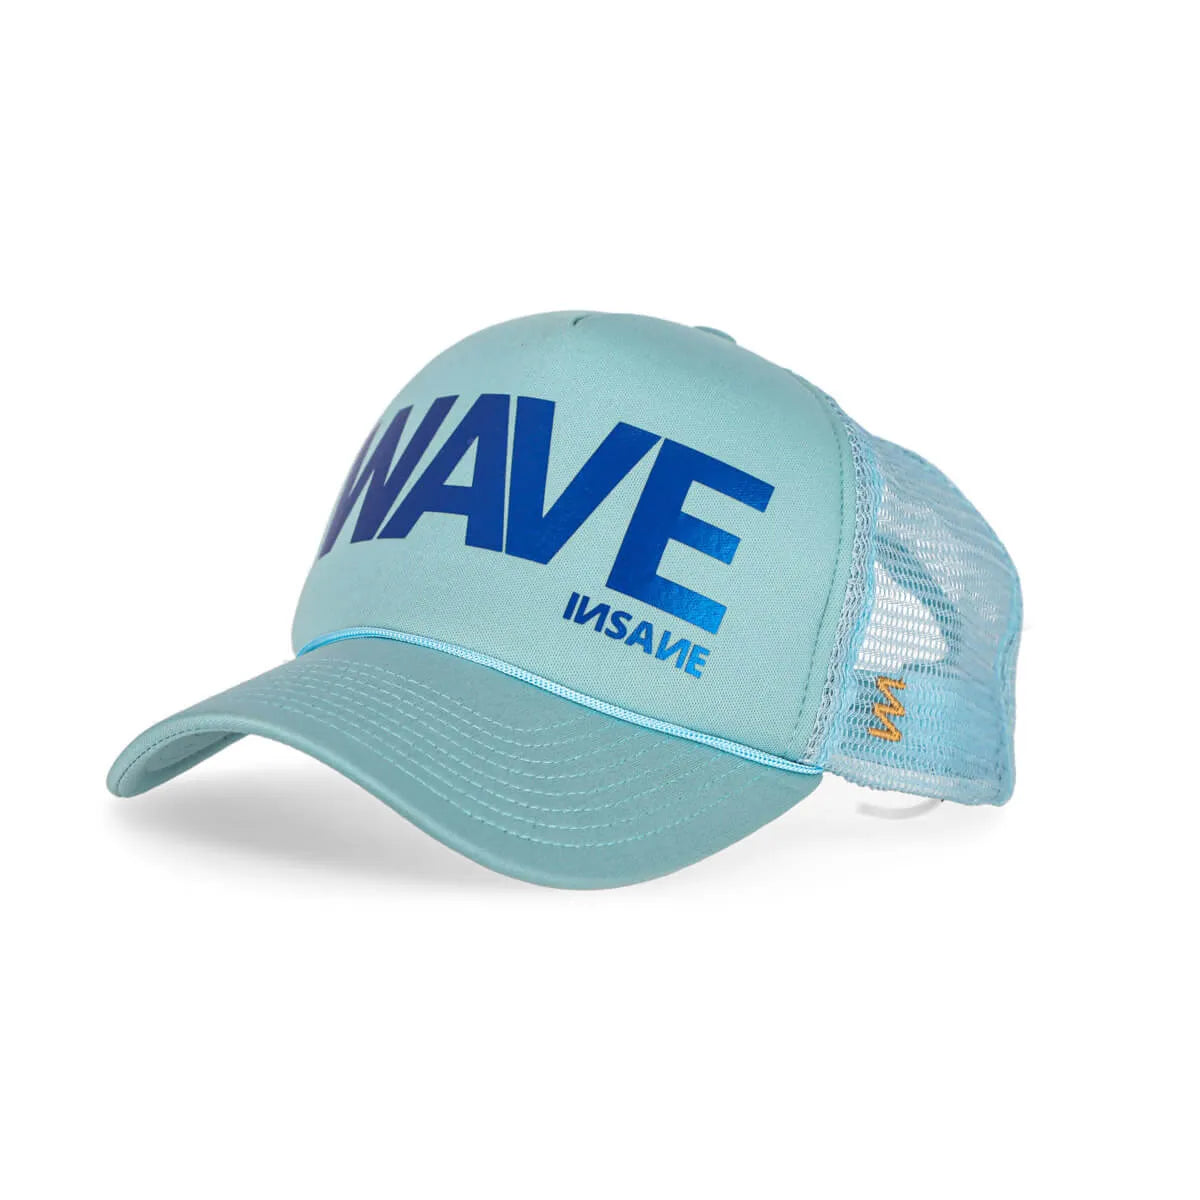 WAVE TRUCKER GREYISH BLUE & BLUE CAP